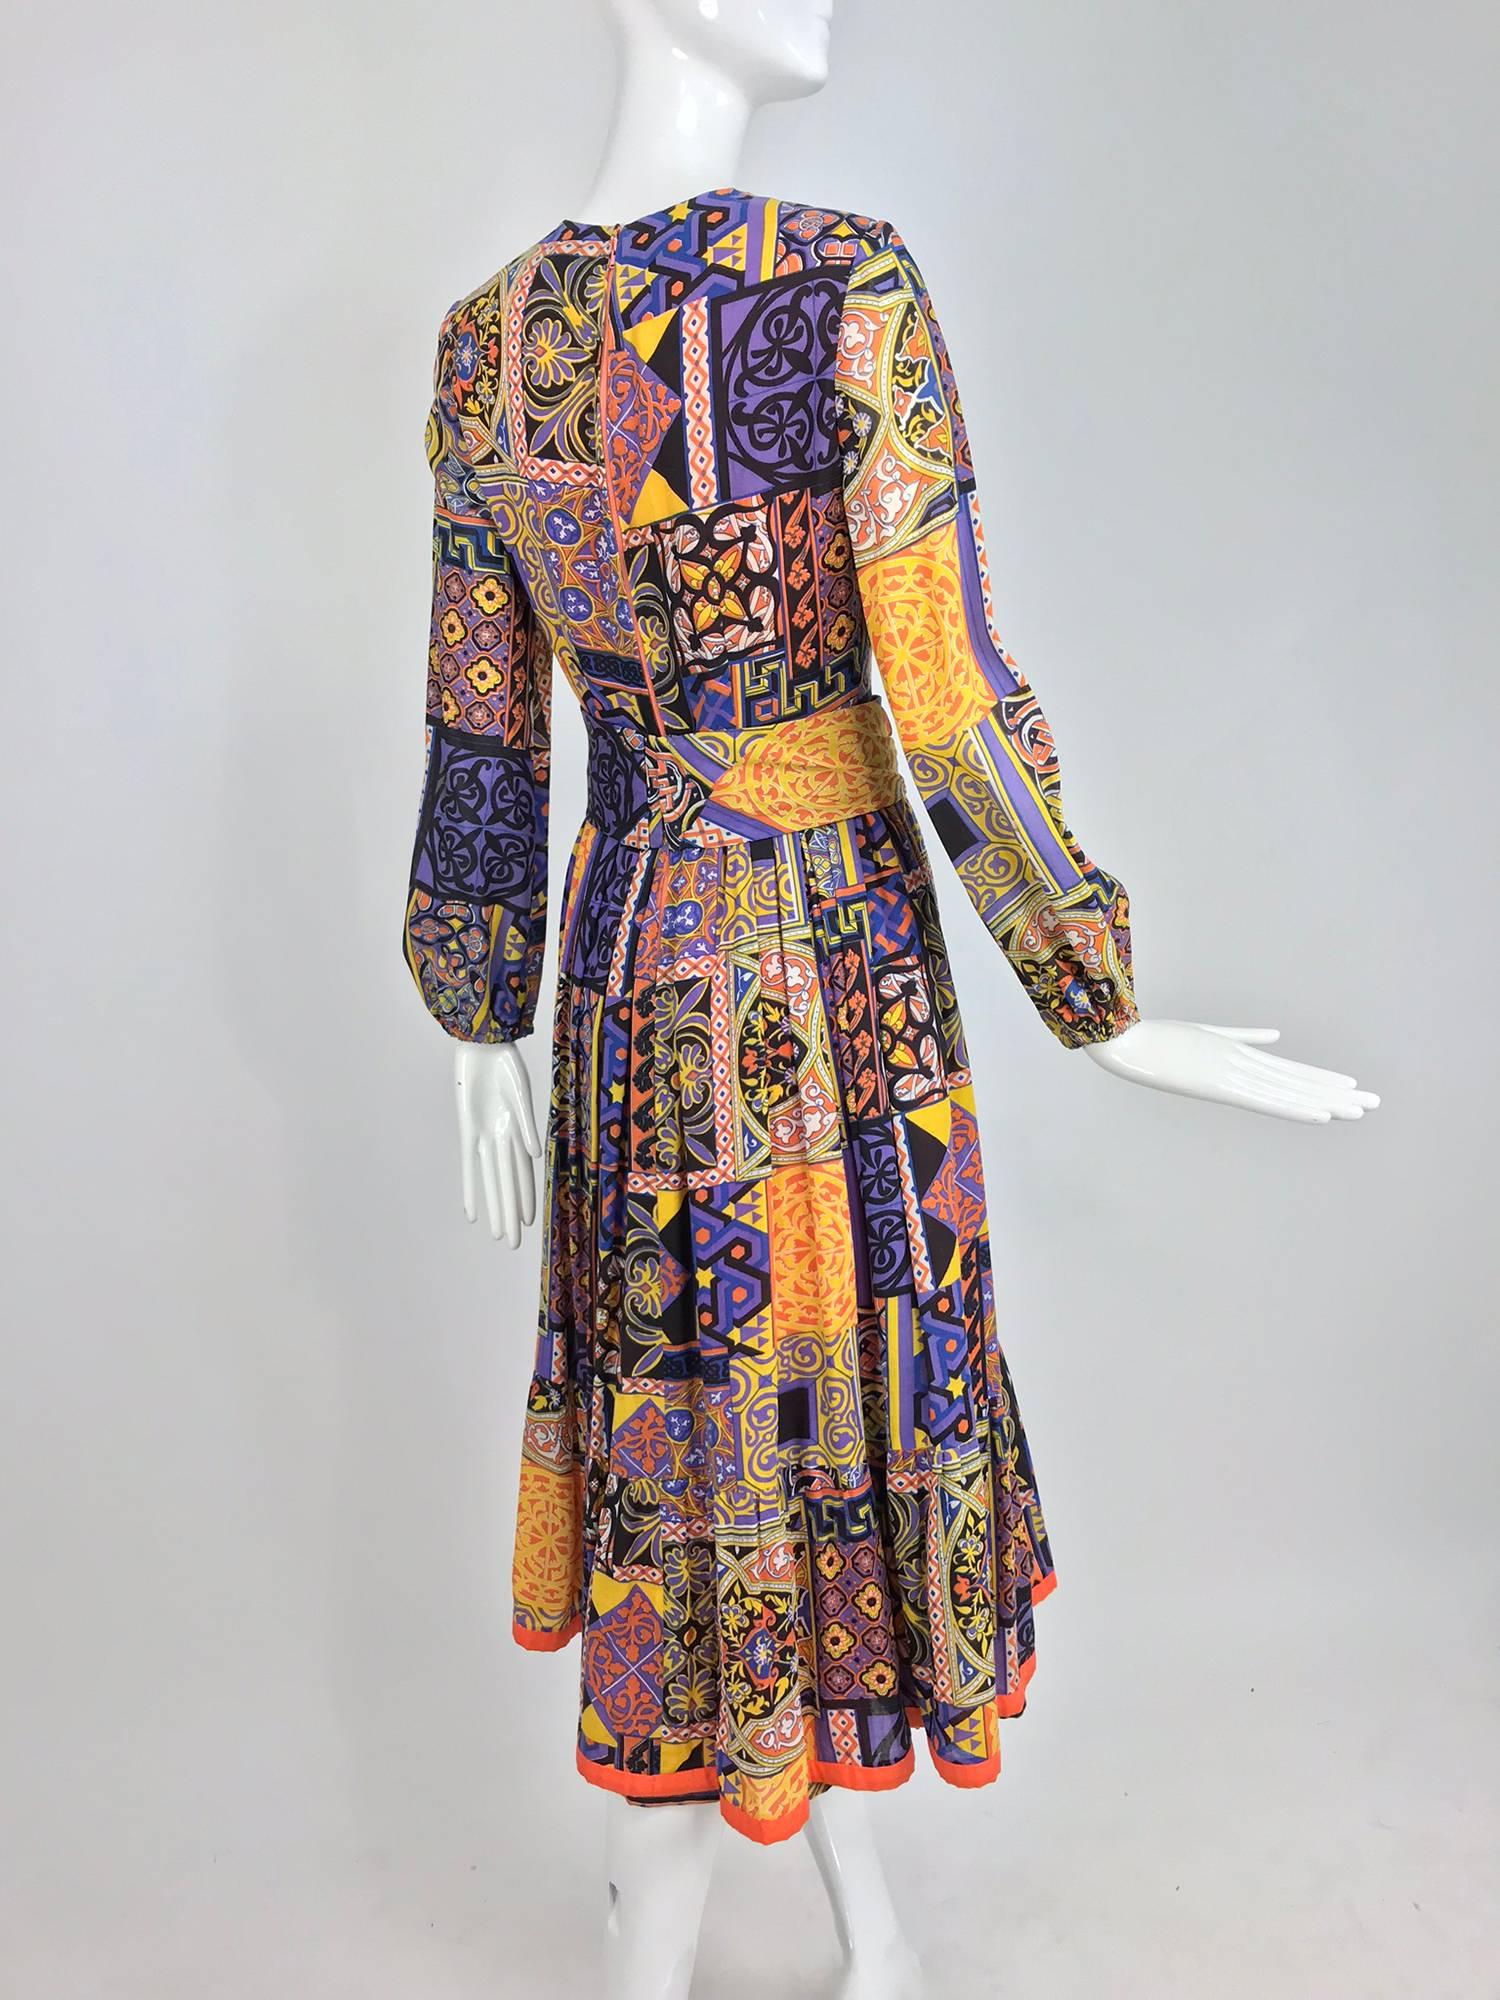 Moorish mosaic cotton print laced front bohemian dress 1960s 7